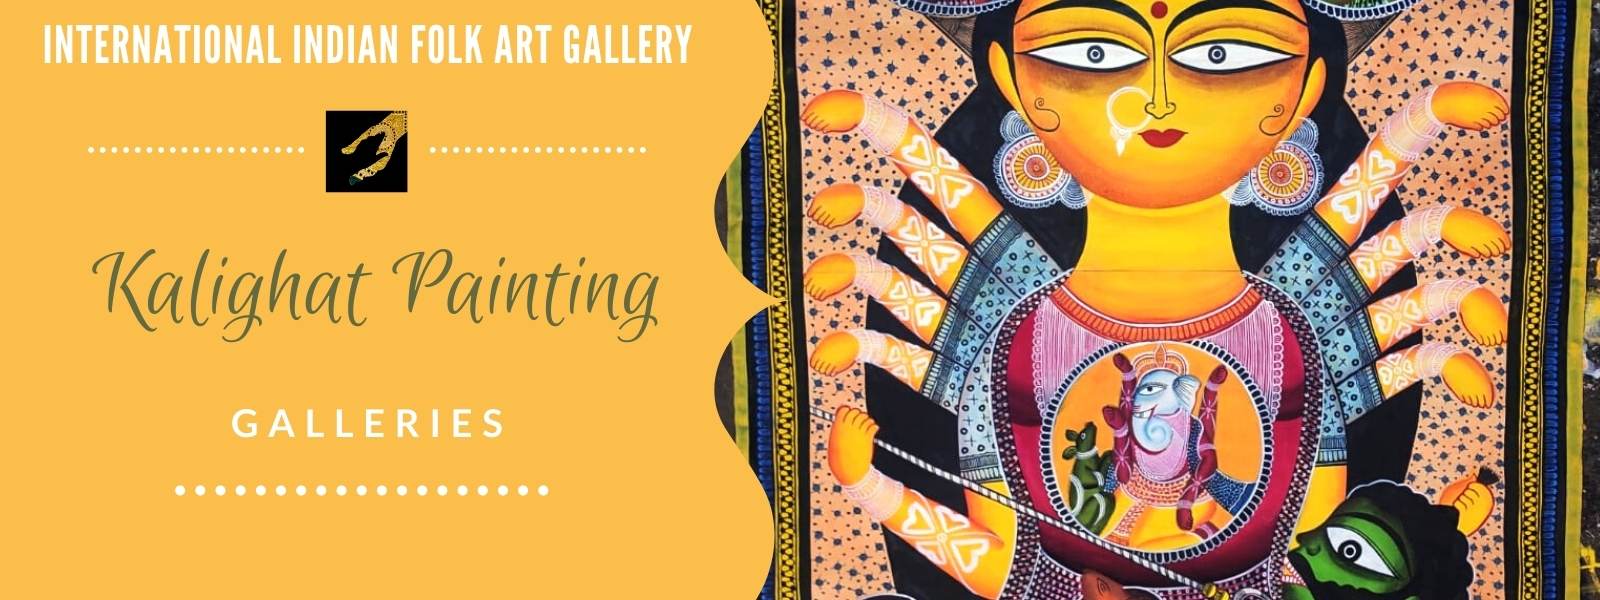 Kalighat Painting International Indian Folk Art Gallery 01